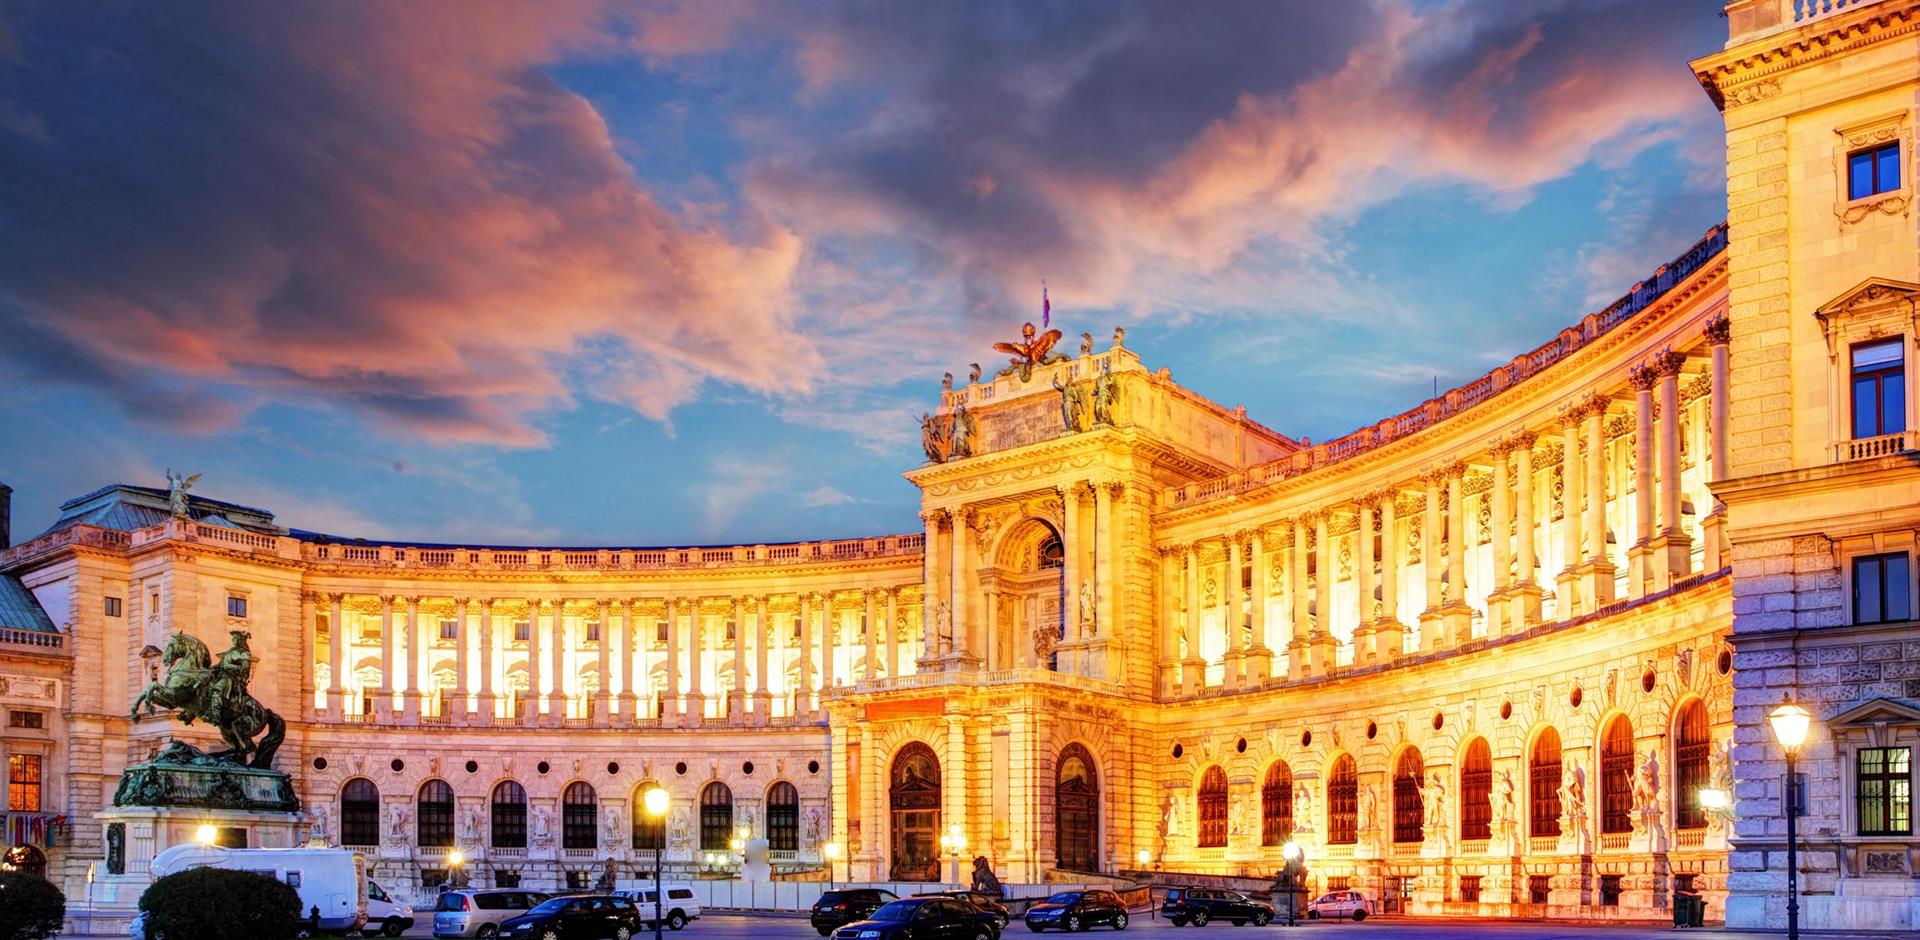 Hofborg Imperial Palace, Vienna, Austria